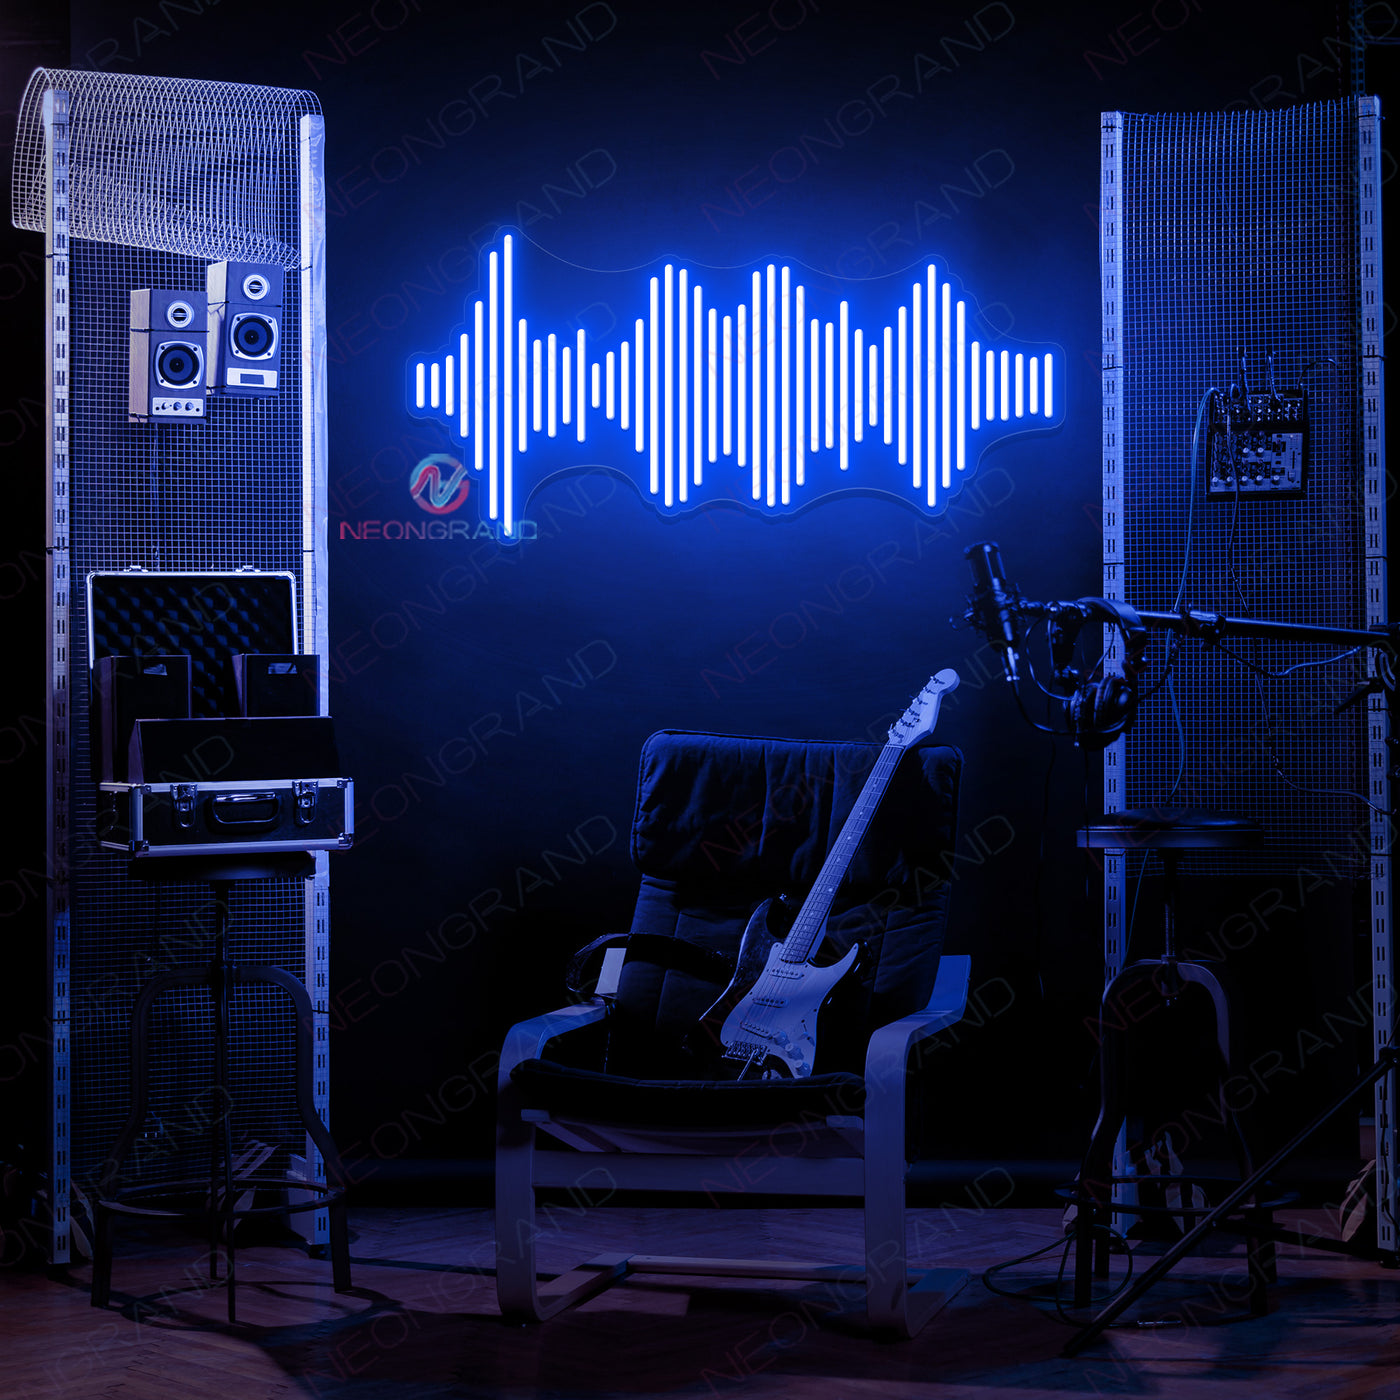 Sound Wave Neon Sign Music Led Light blue